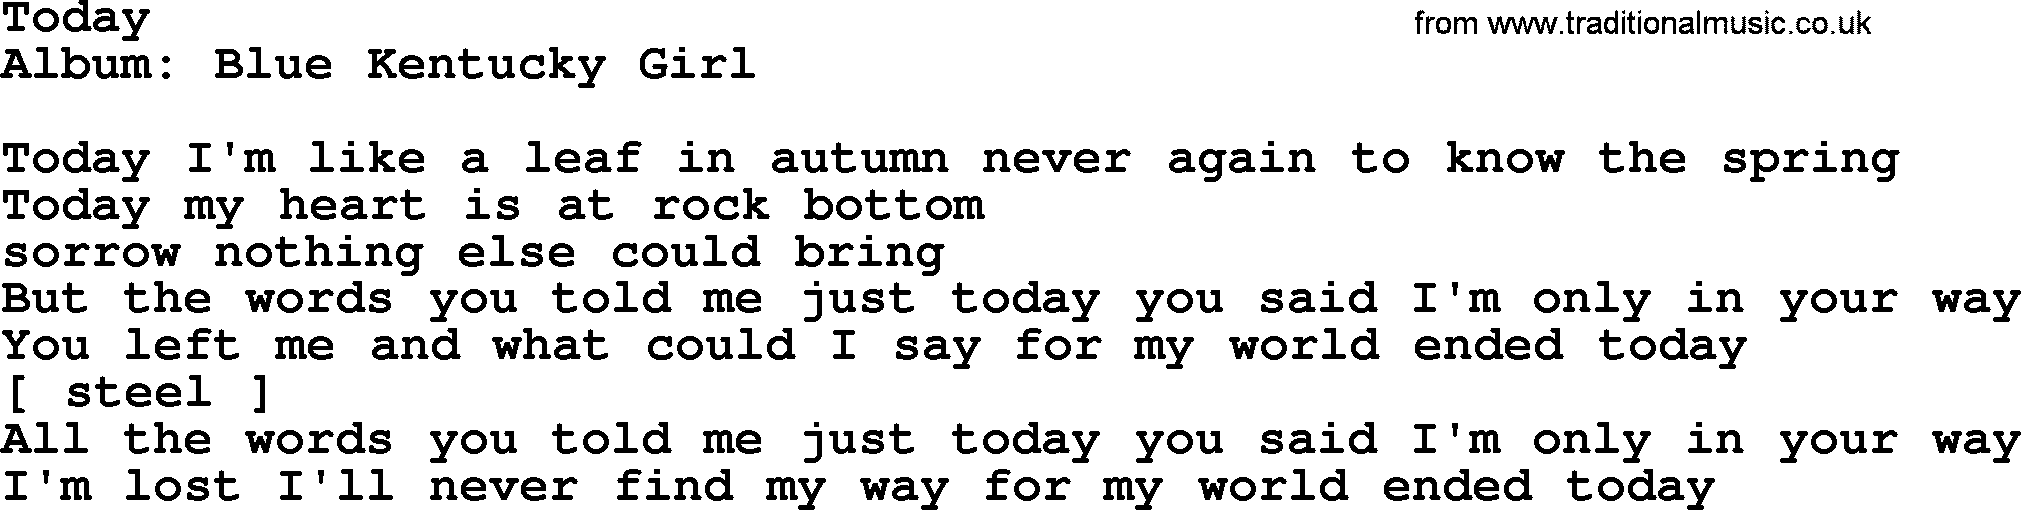 Loretta Lynn song: Today lyrics